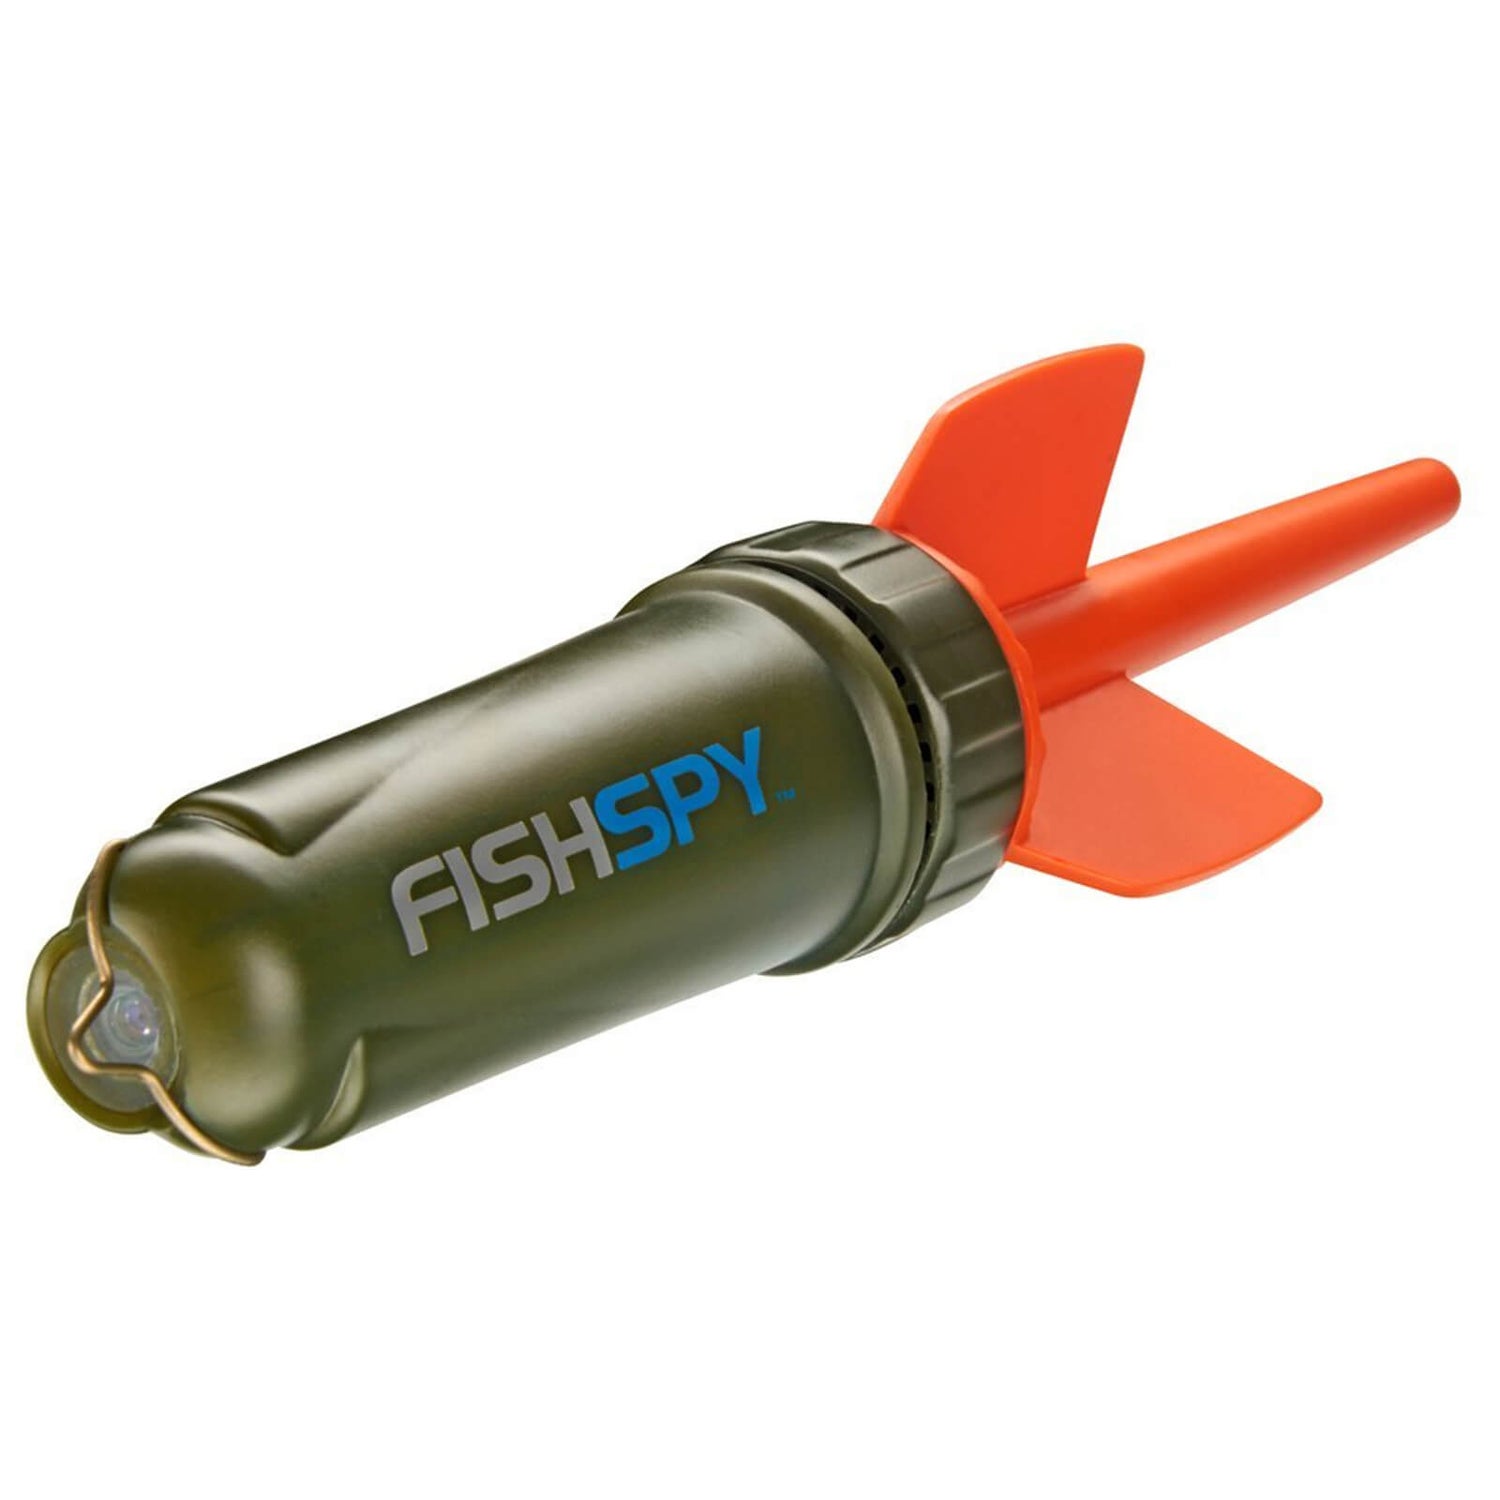 FishSpy Marker Float Underwater Fishing Camera Stream Live Video with App